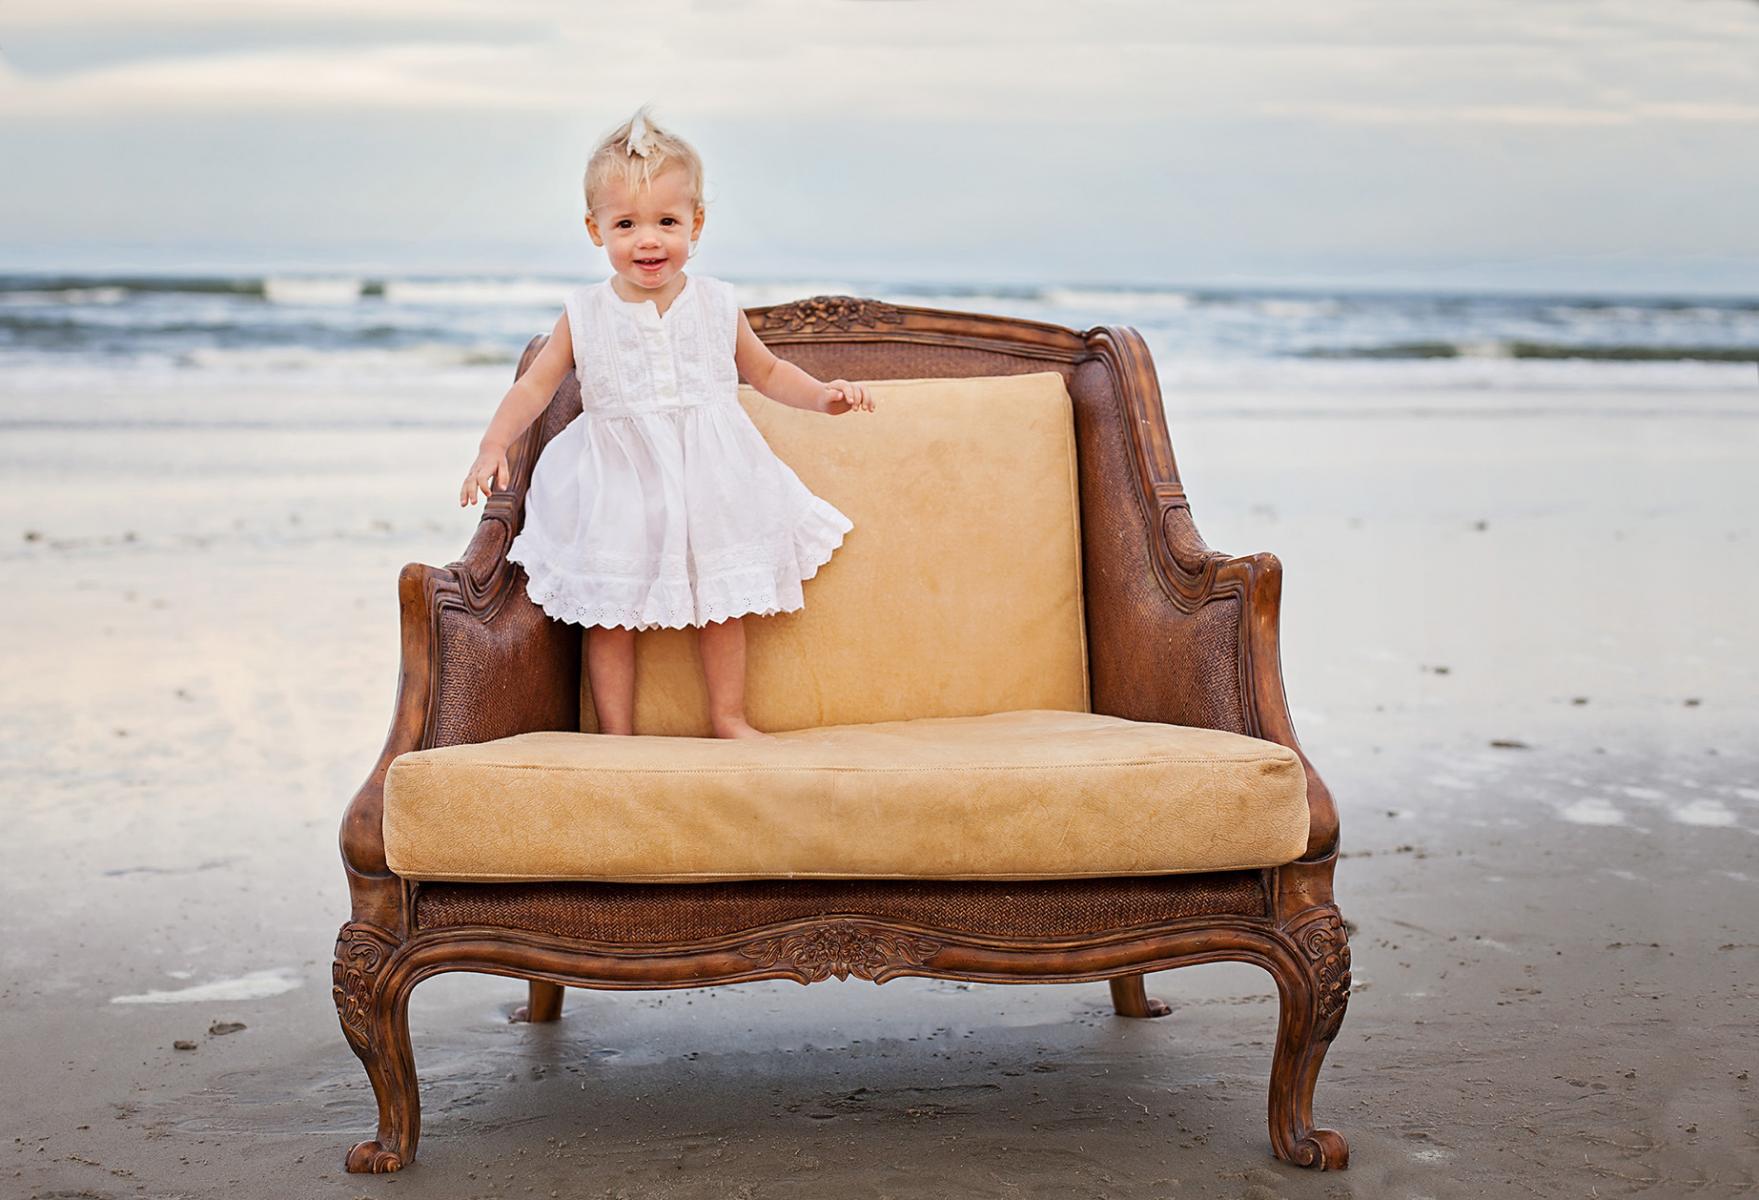 Sweet little girl photograph on chair at the beach Corolla NC